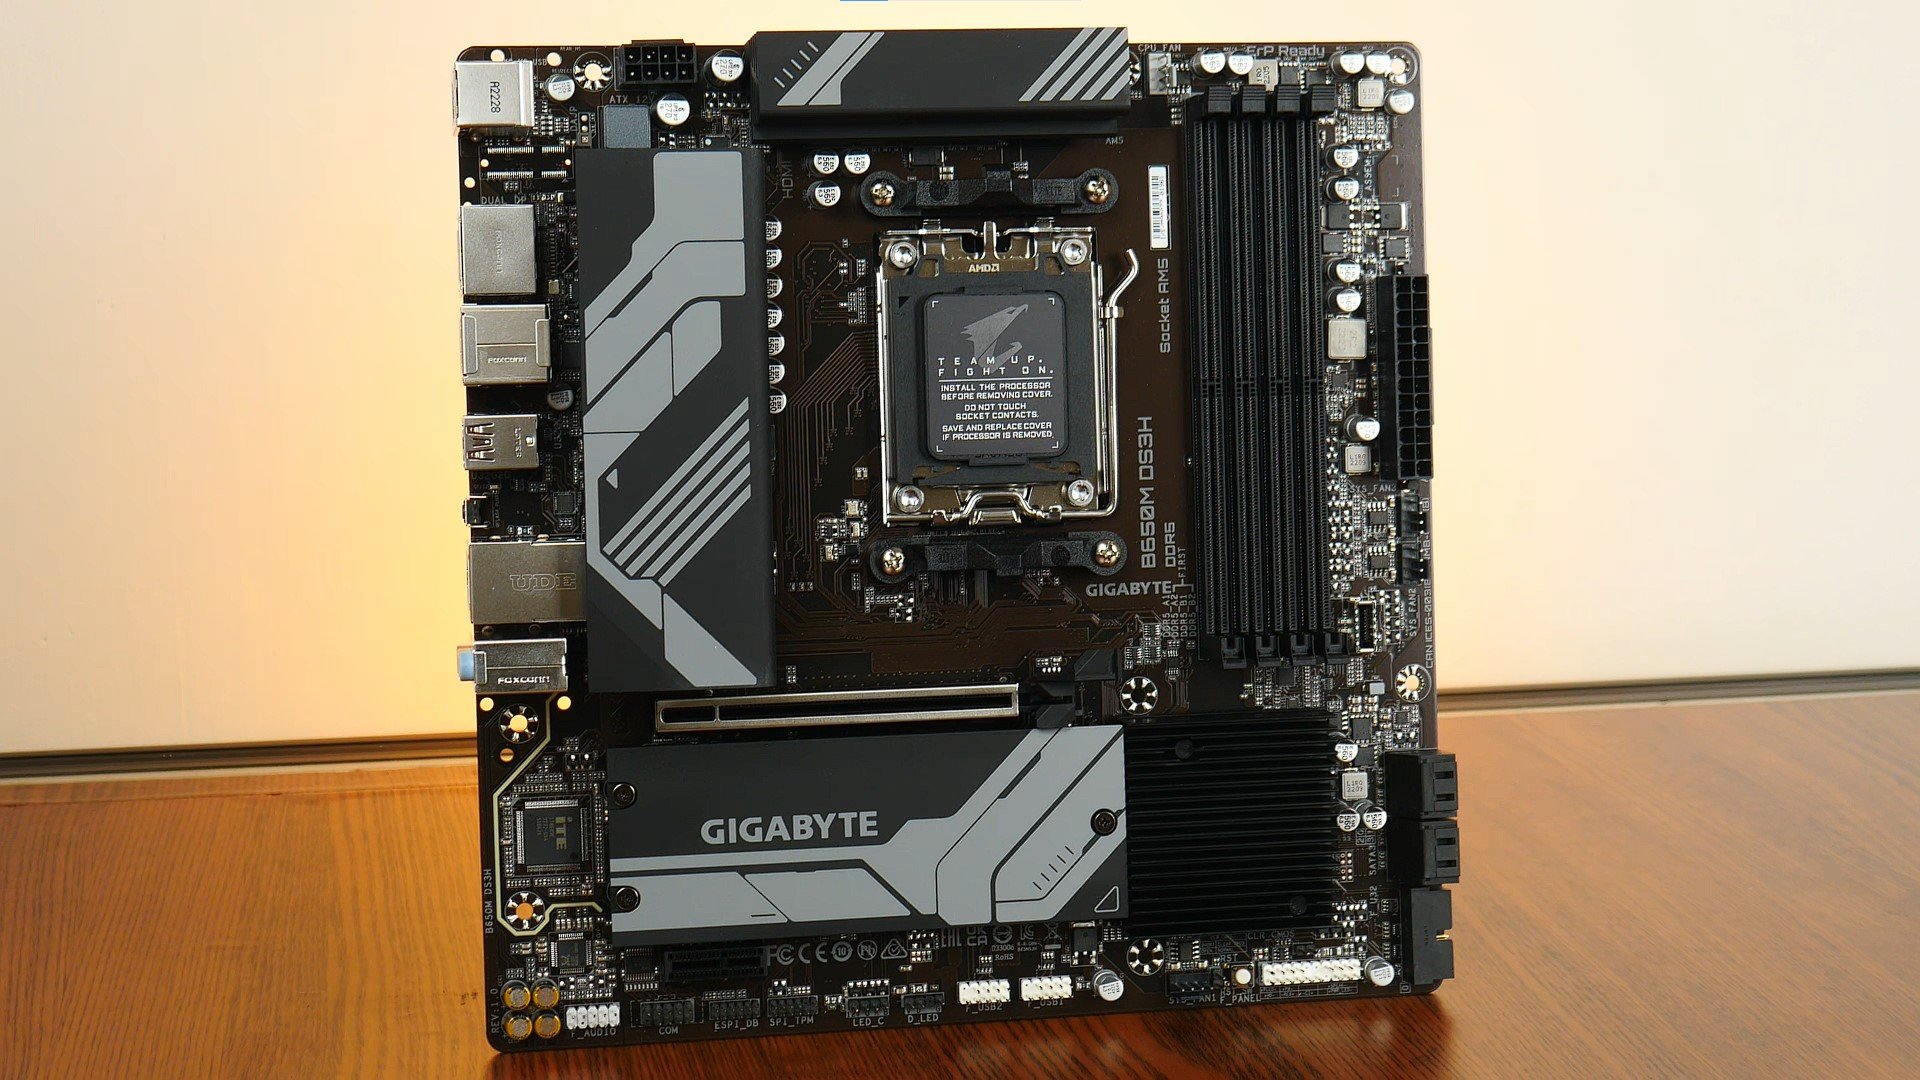 gigabyte motherboard